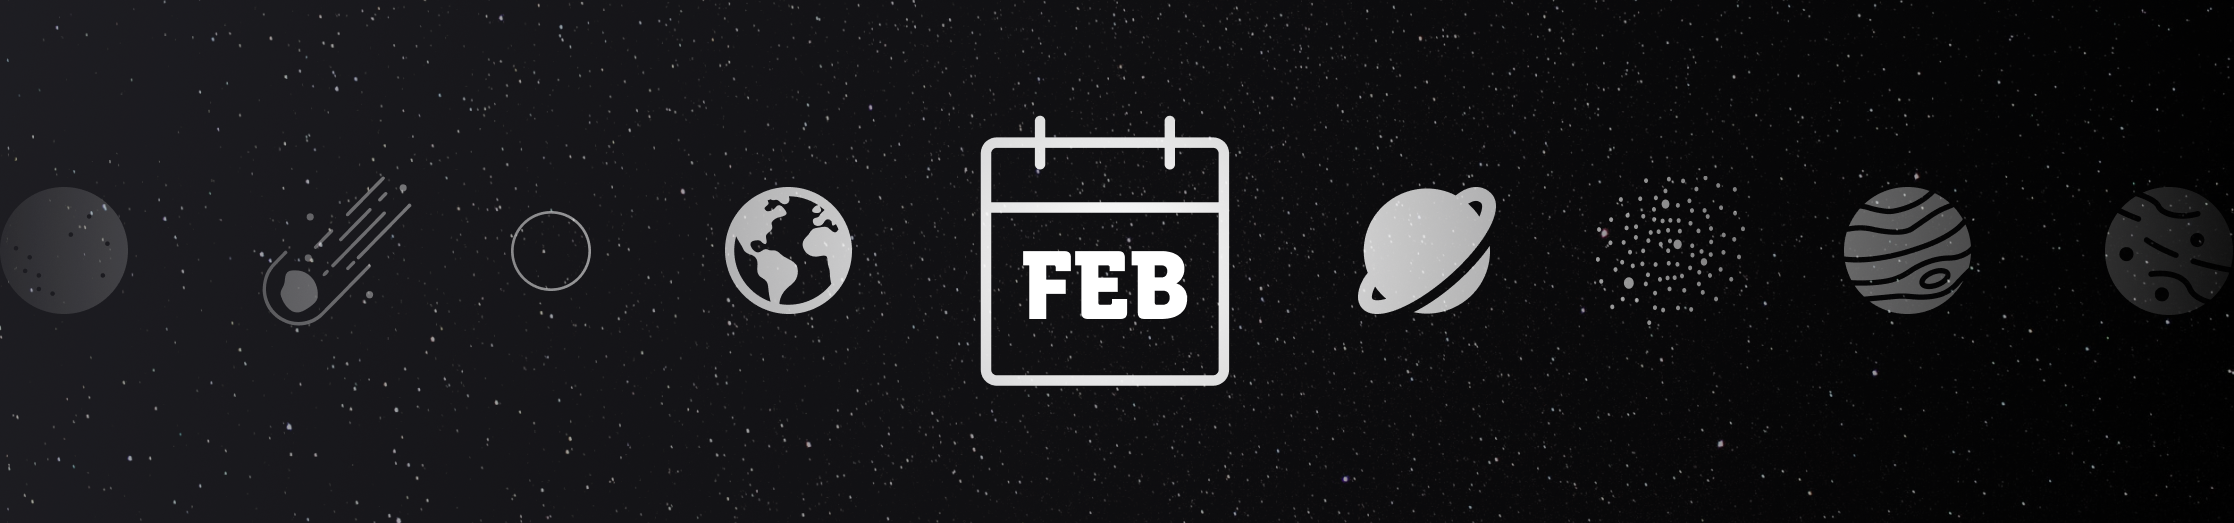 Astrocalendario de febrero de 2022